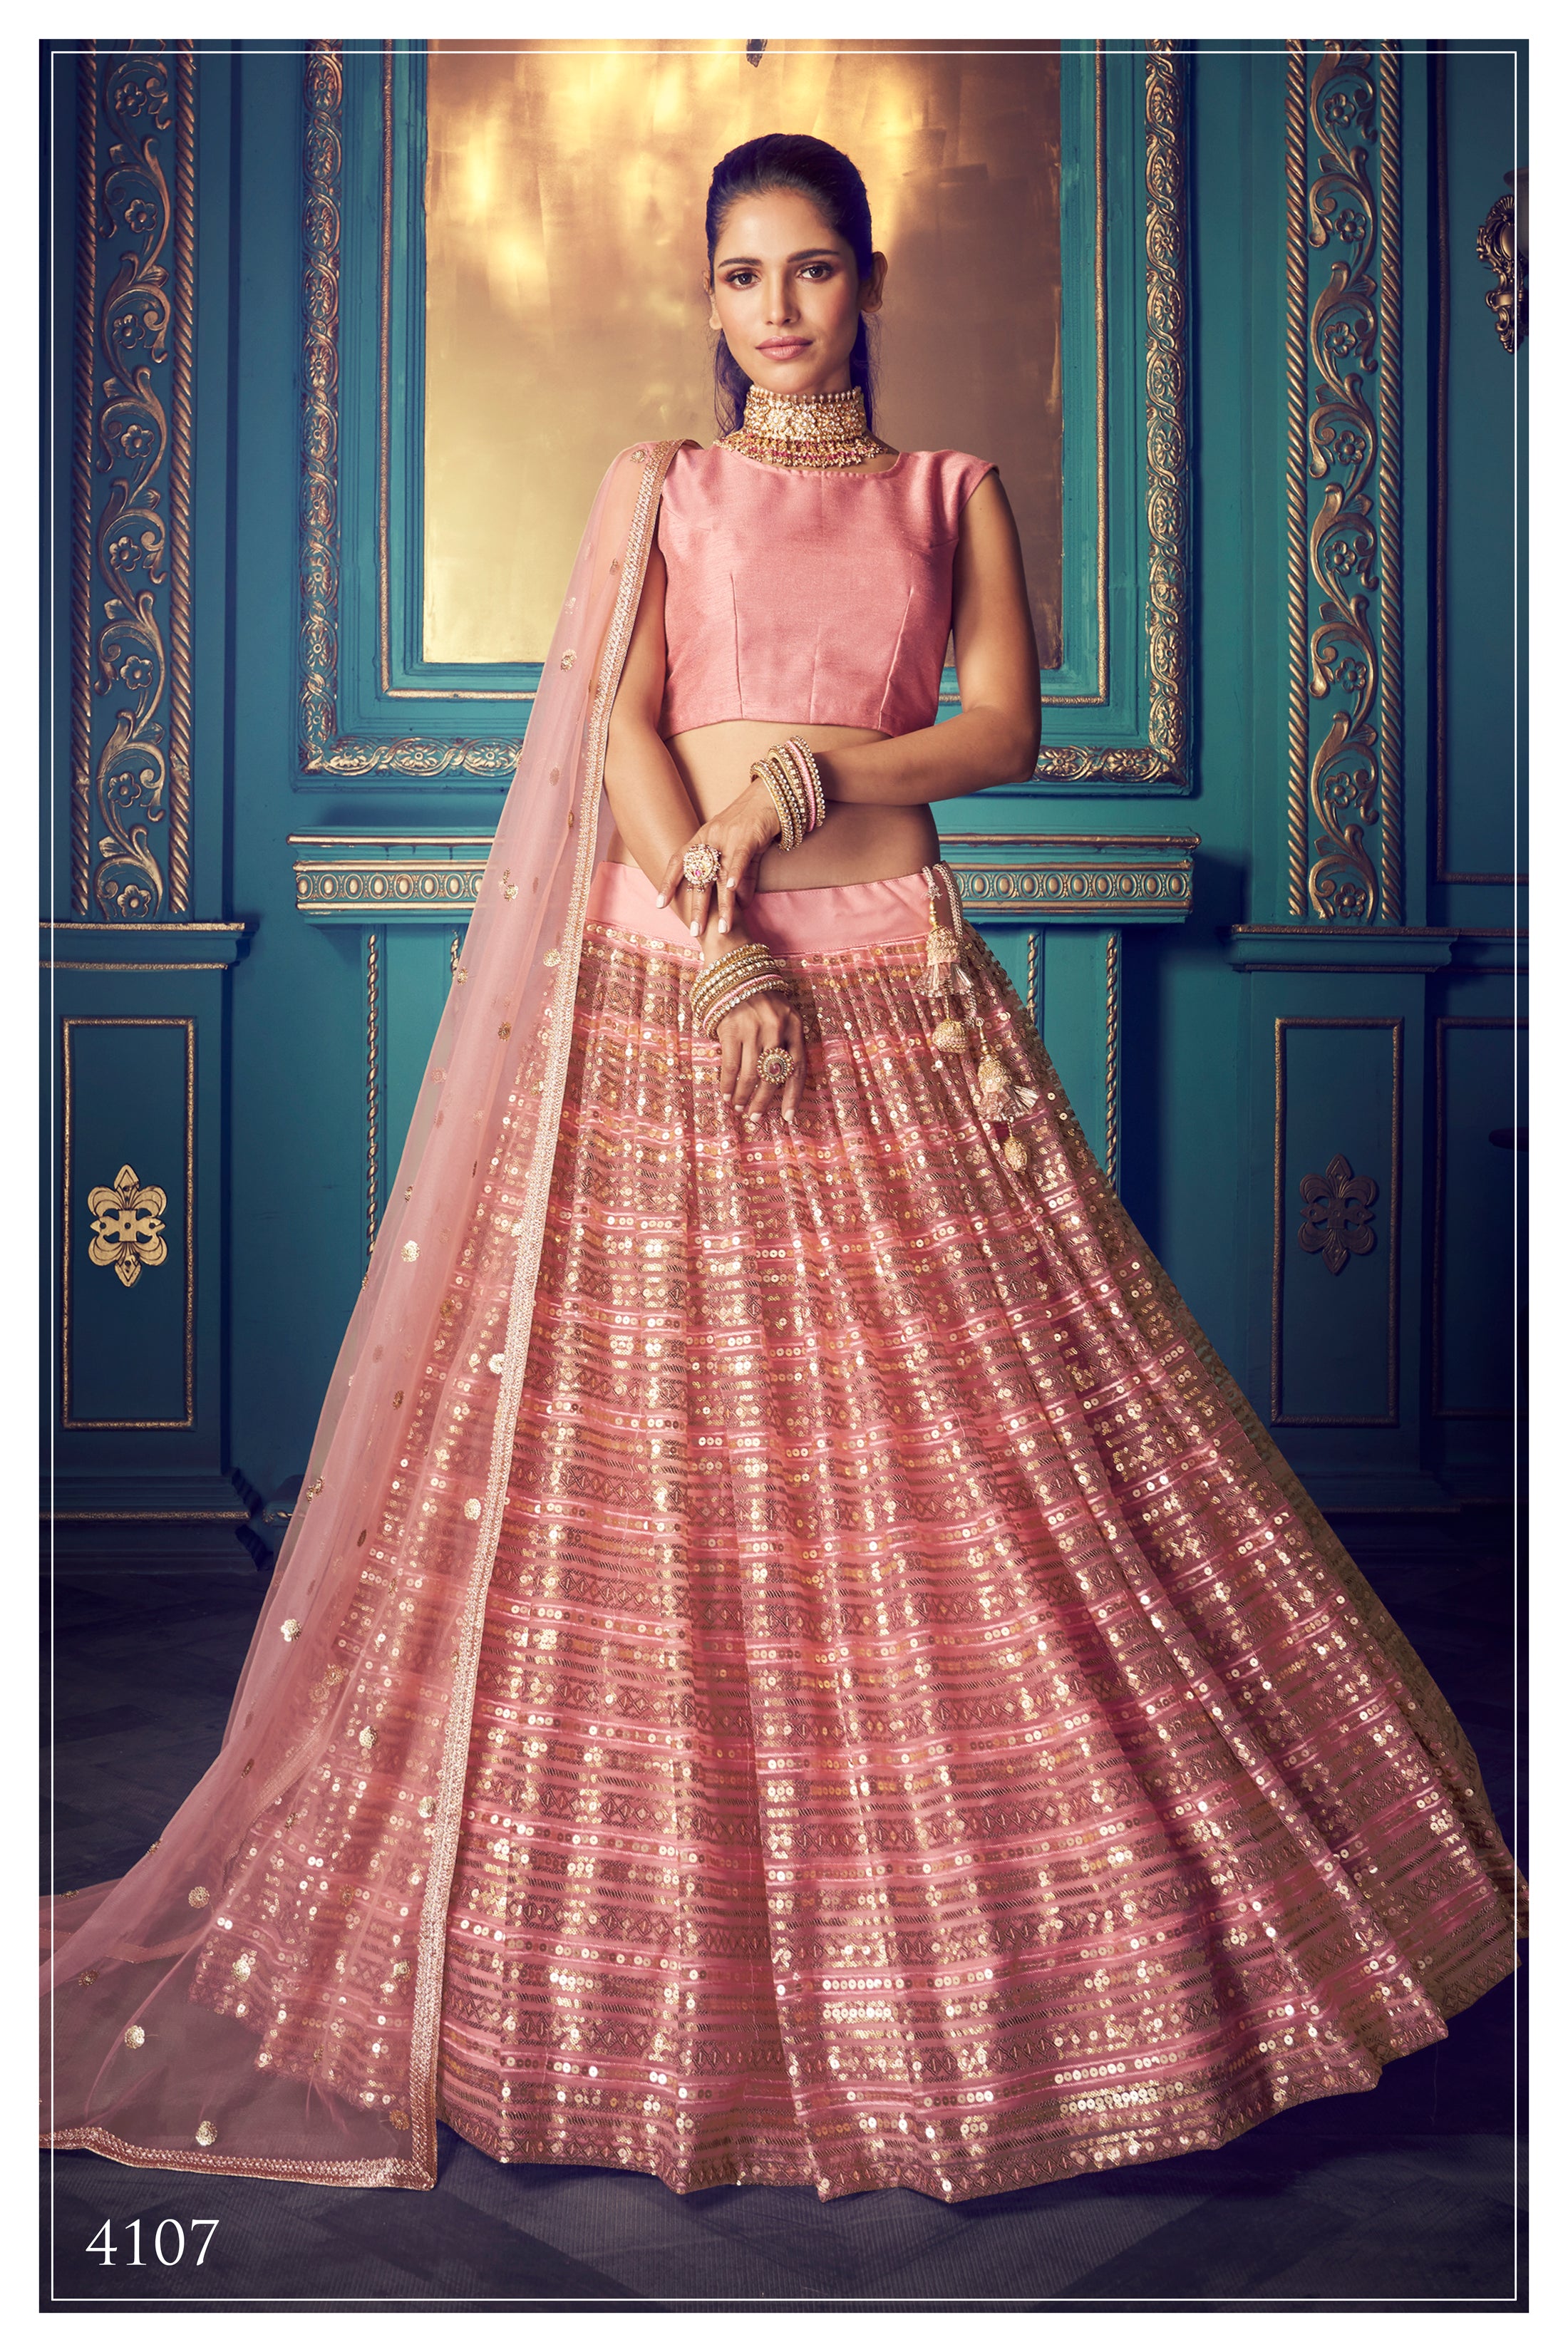 Buy Pink color georgette embroidery designer lehenga choli at fealdeal.com